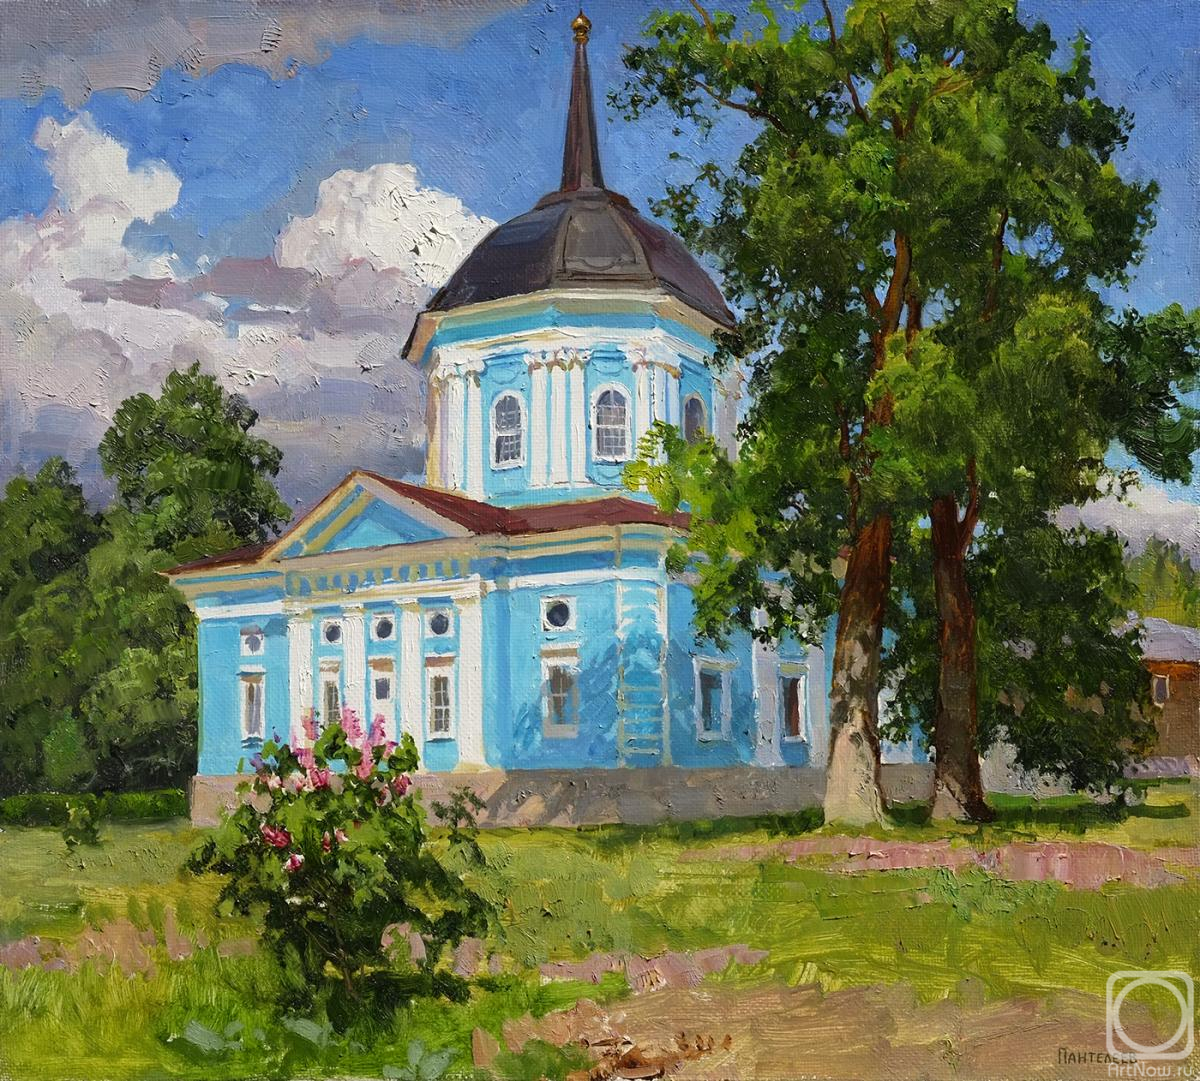 Panteleev Sergey. Polivanovo. June